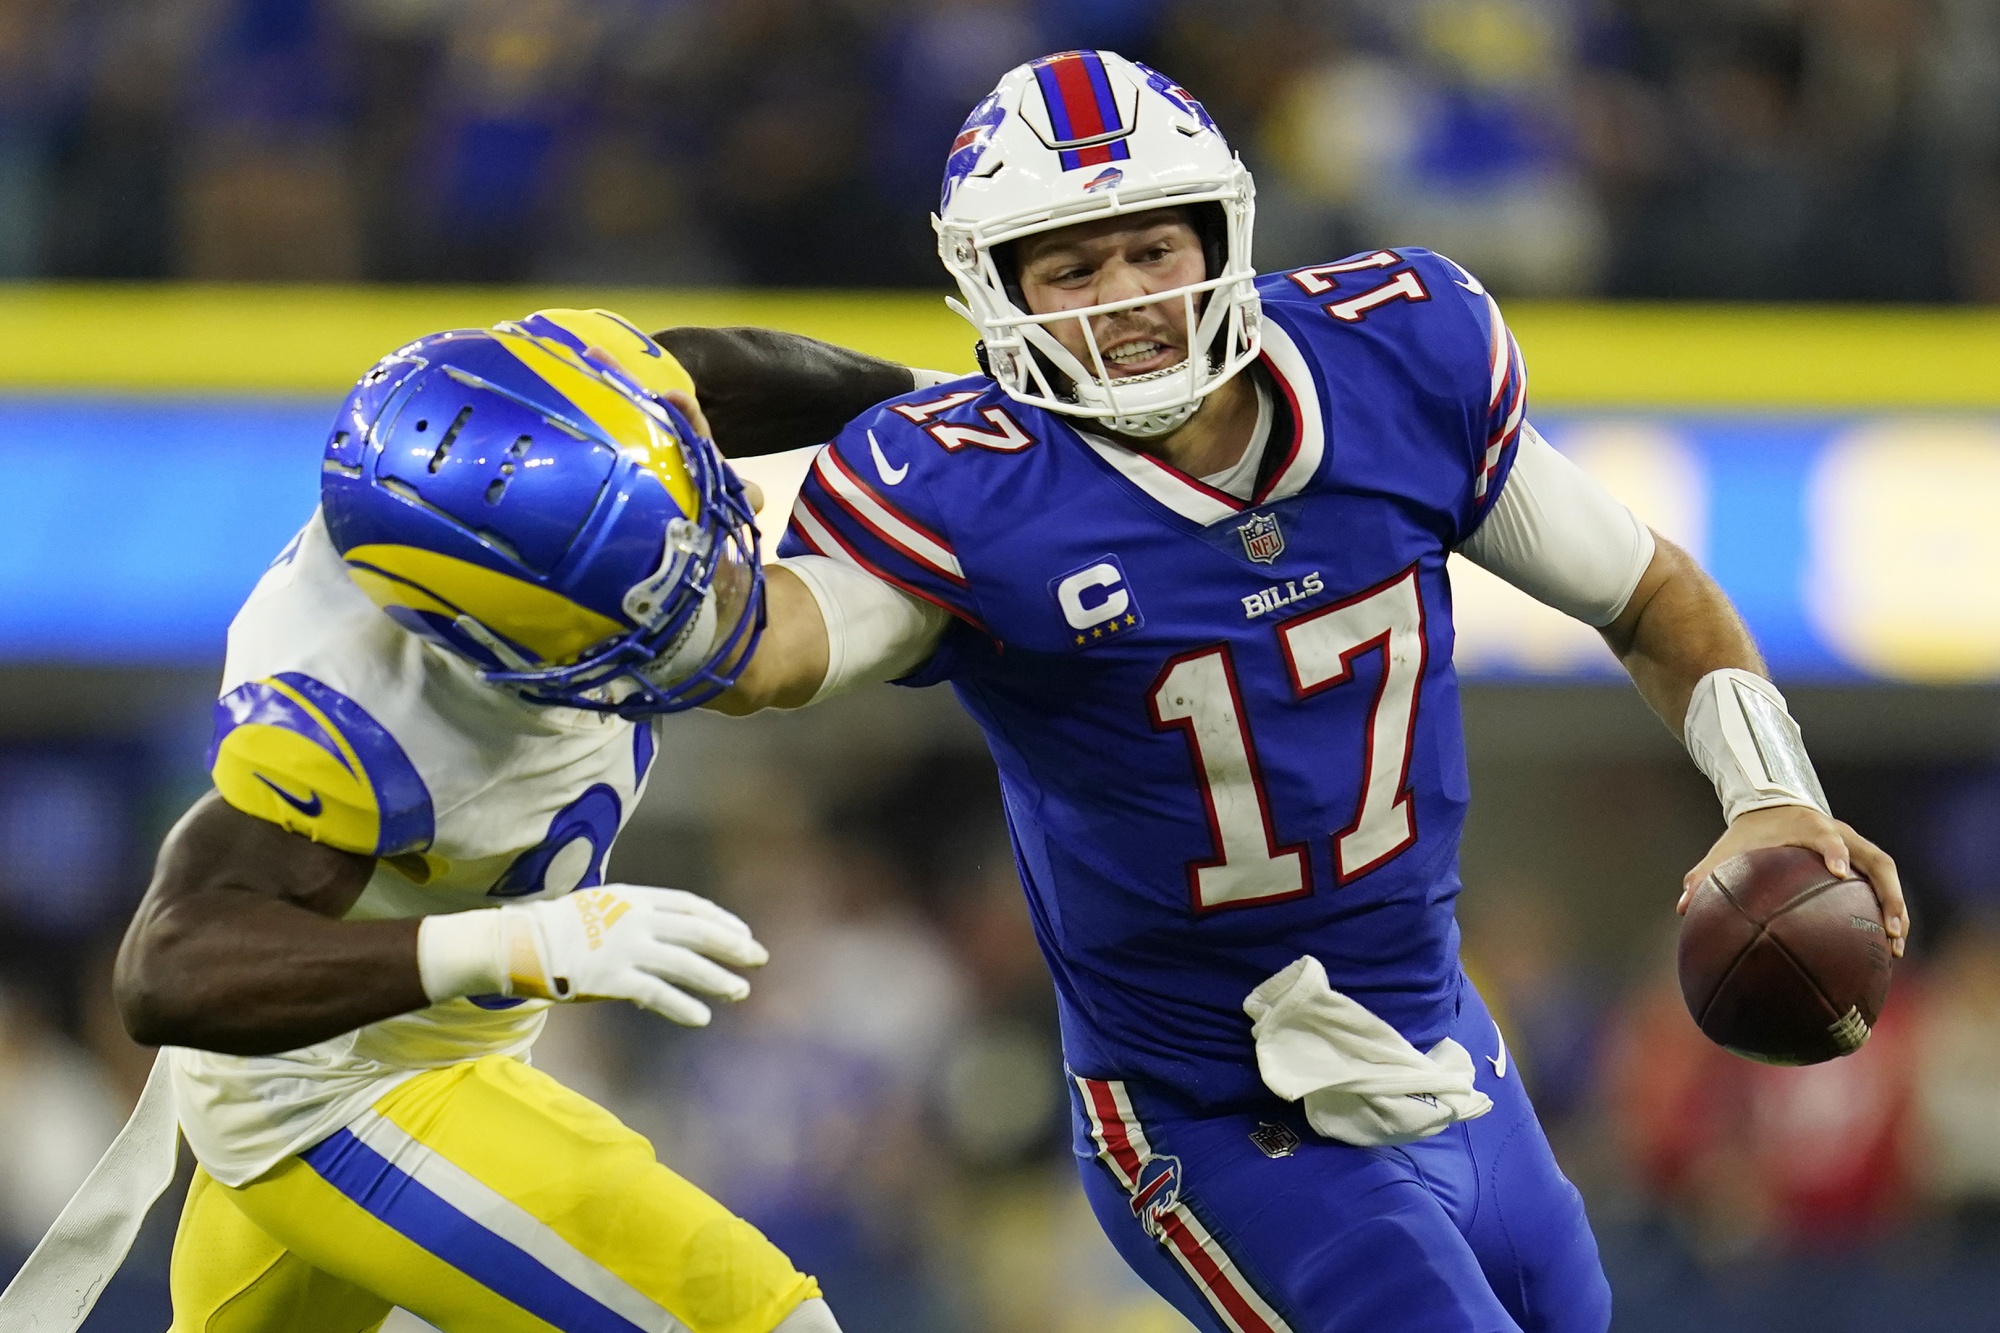 NFL season kicks off tonight as Super Bowl champ Rams host Bills